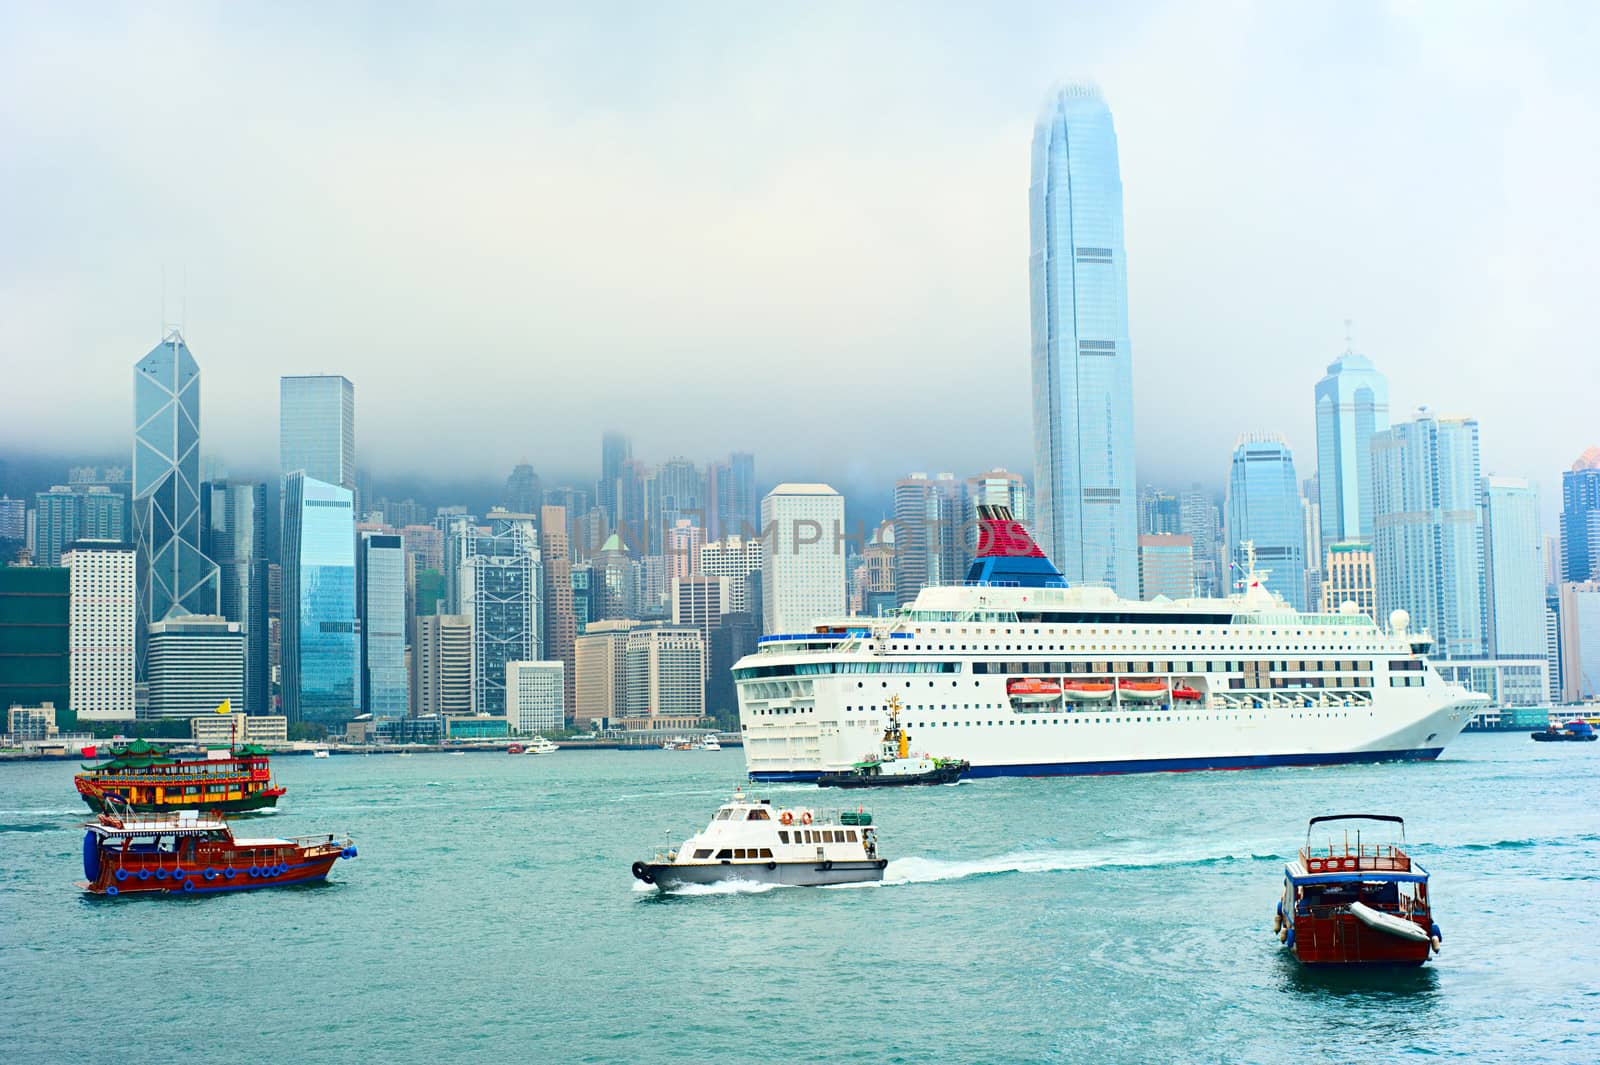 Hong Kong harbor and ferry by joyfull